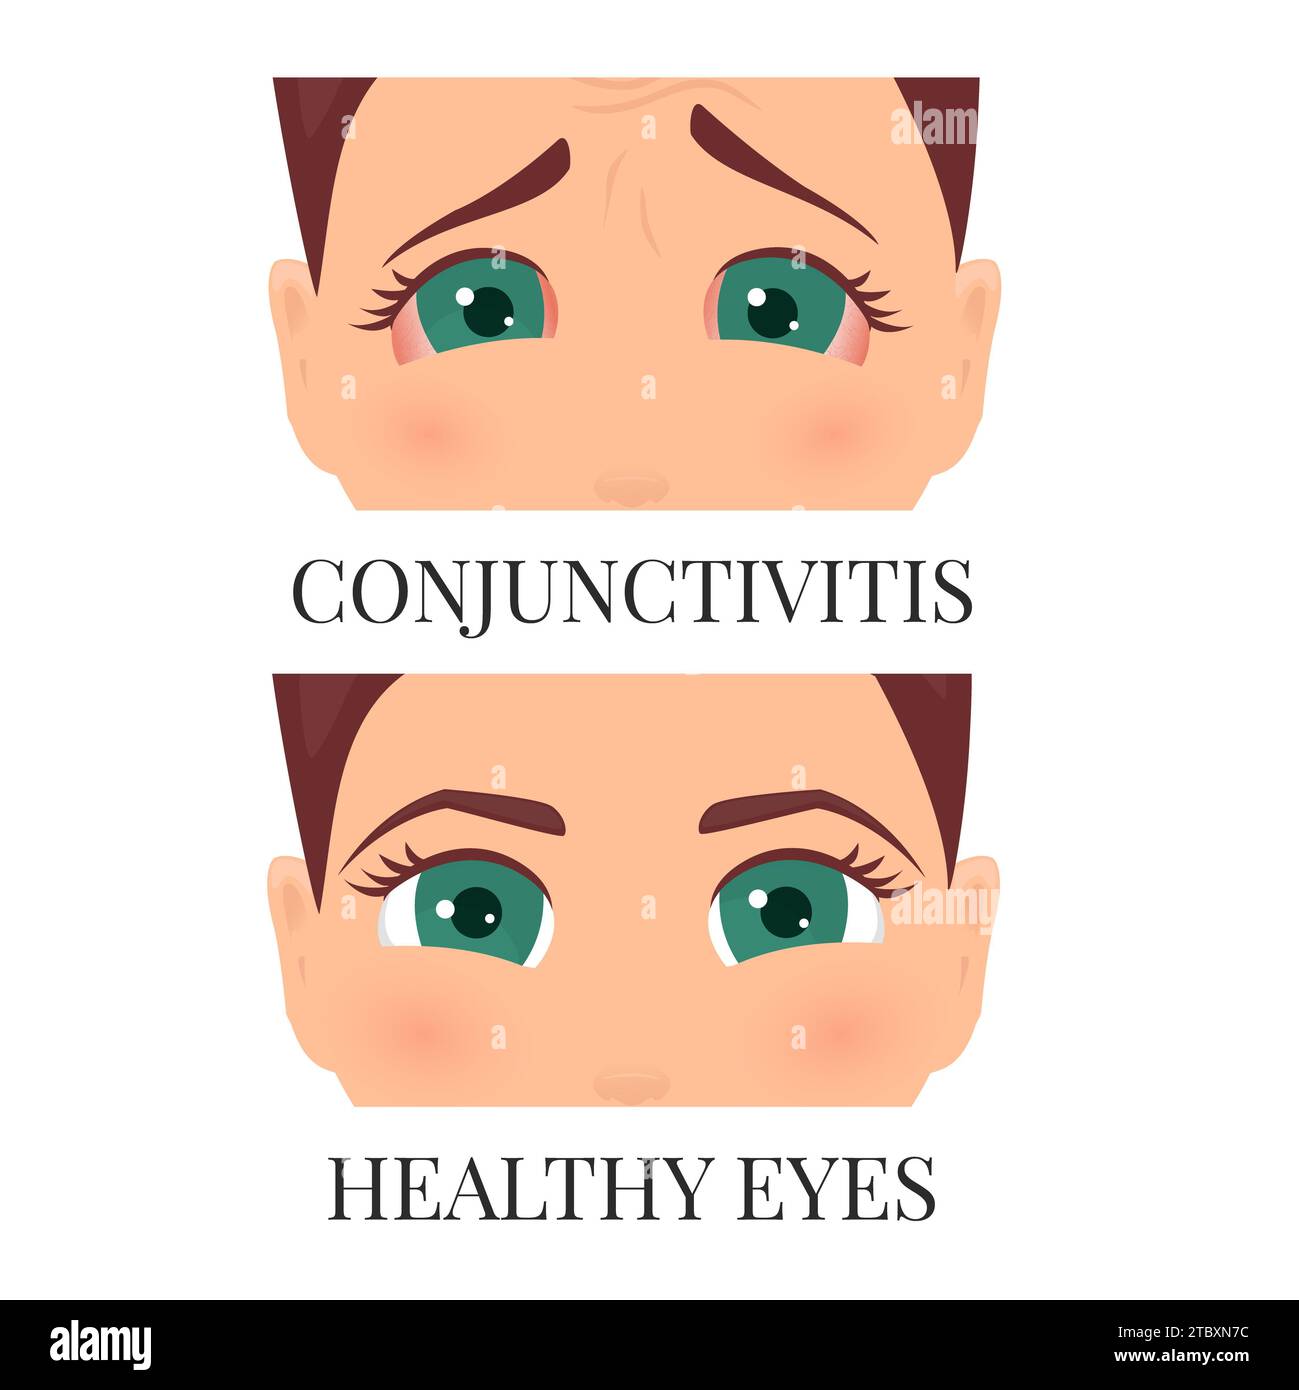 Conjunctivitis, conceptual illustration Stock Photo